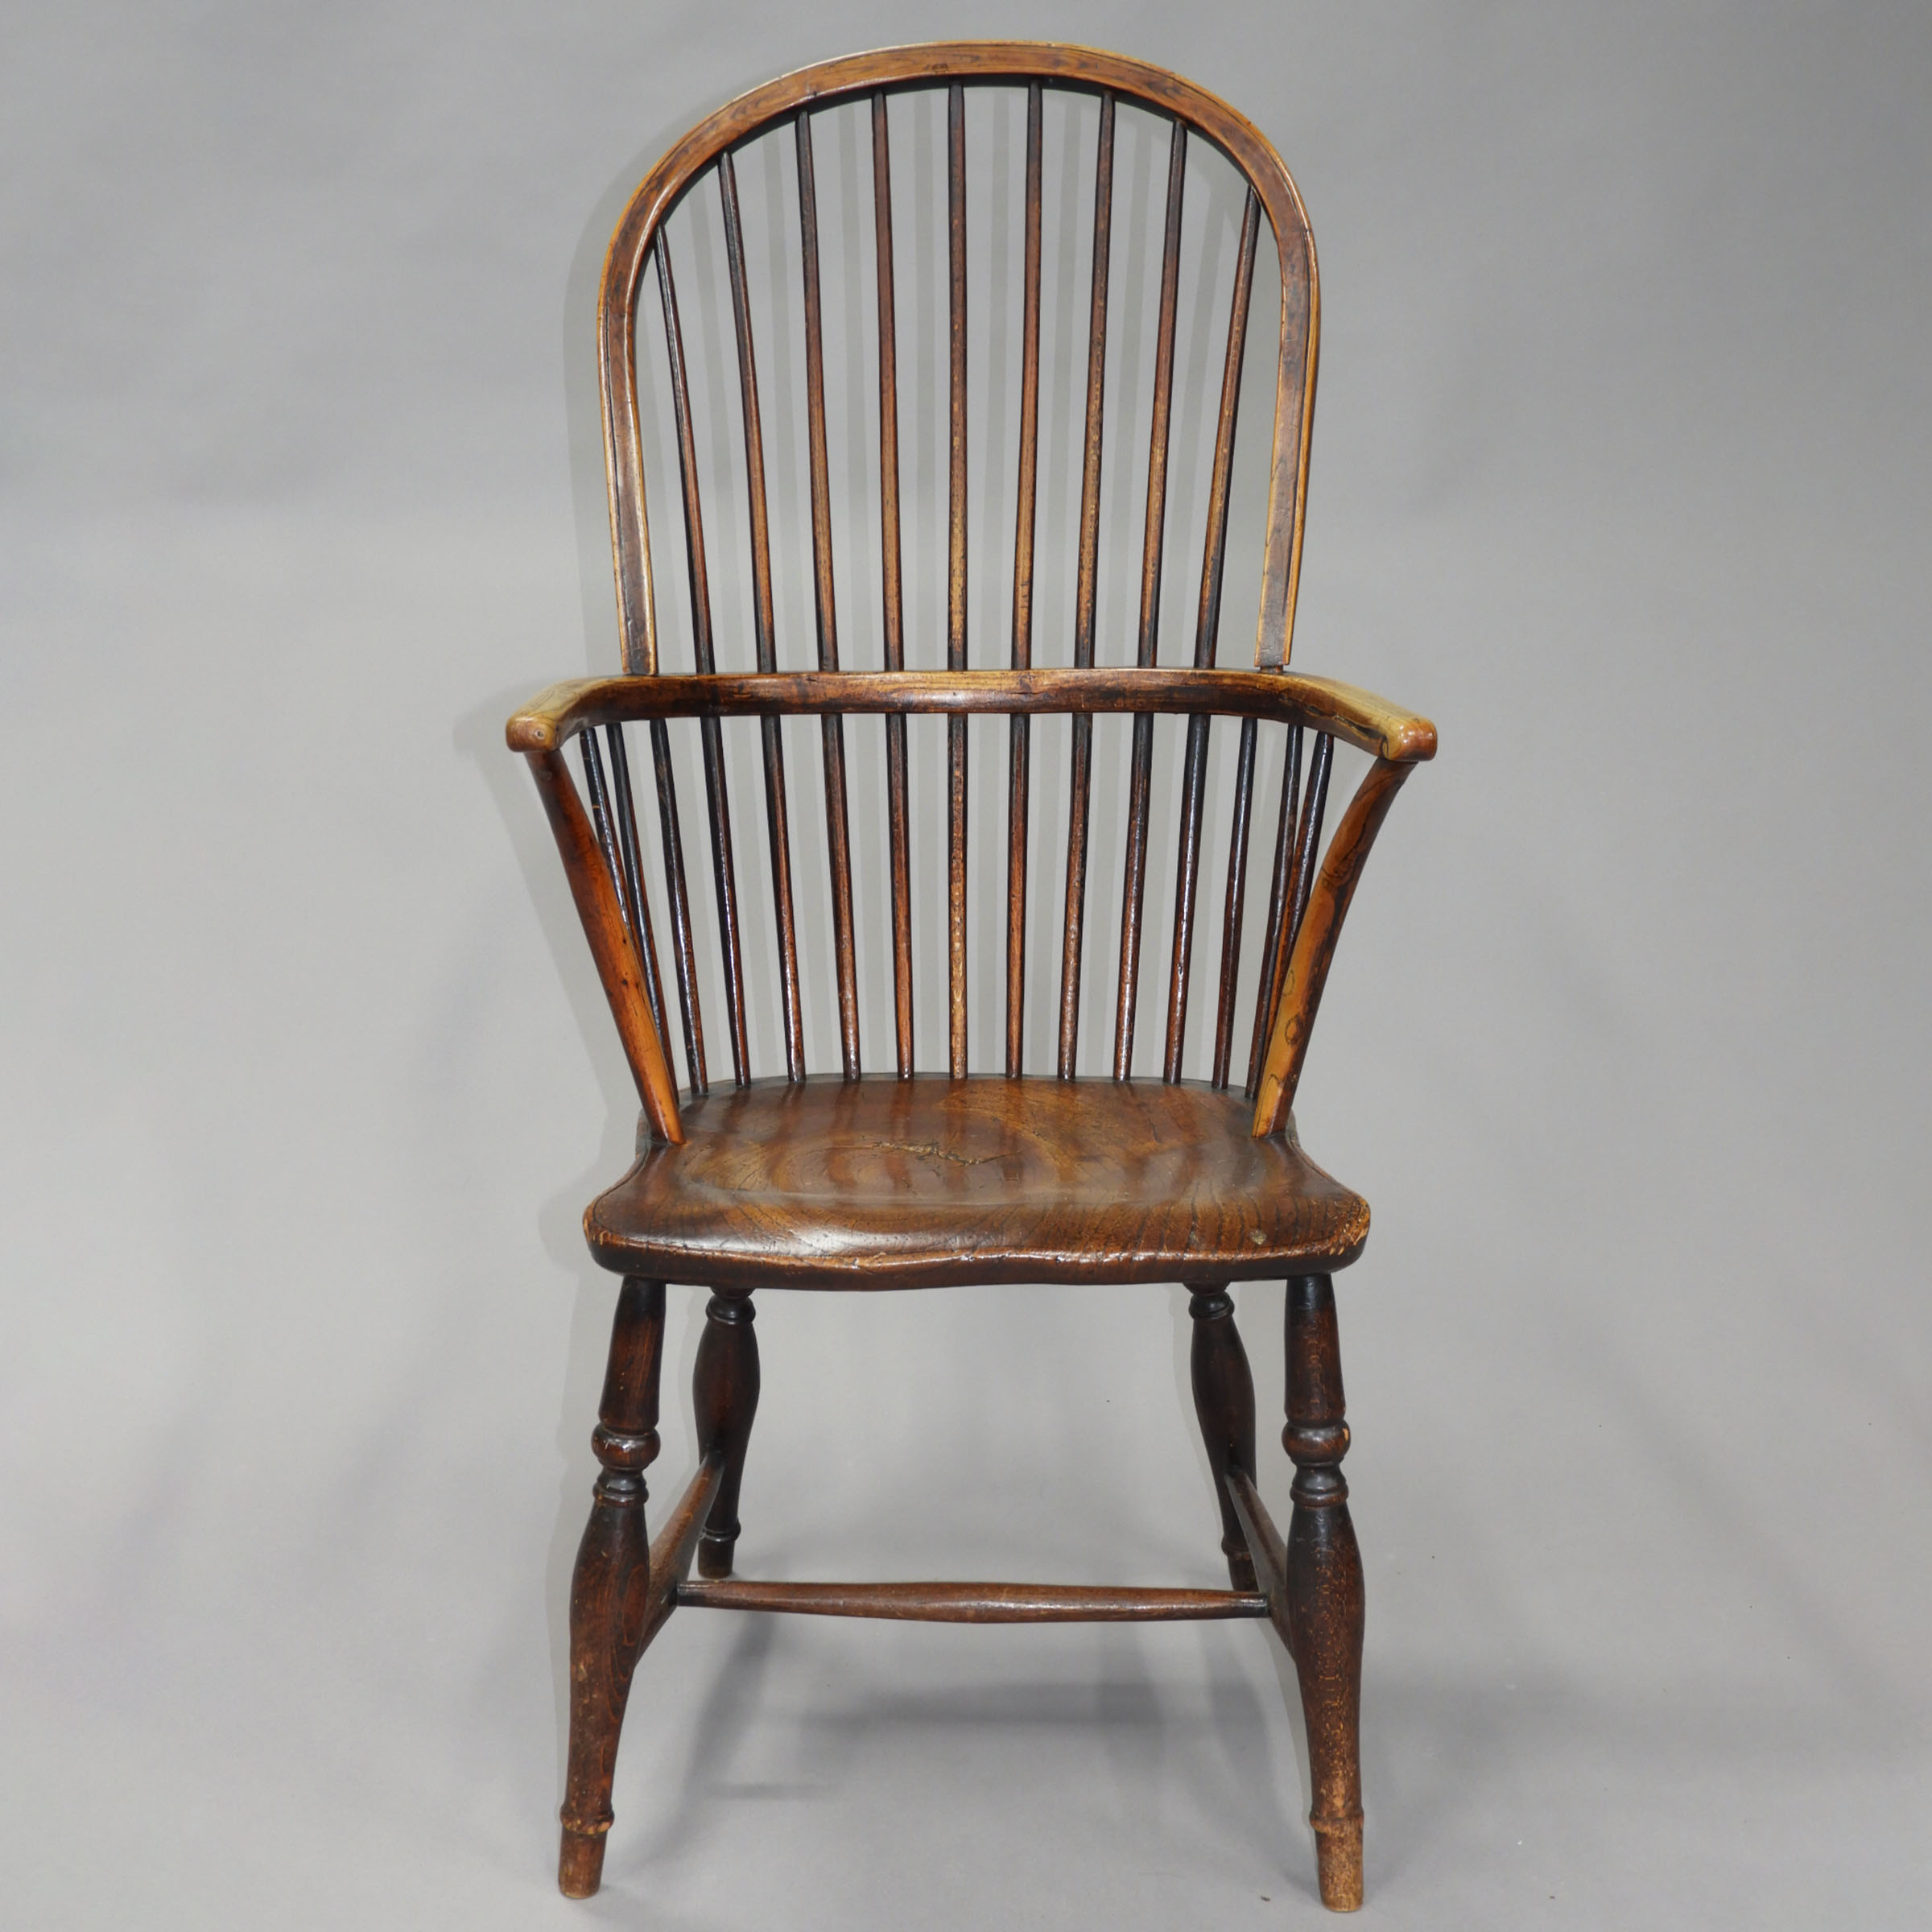 Elm Bow Back Windsor Arm Chair, early 19th century